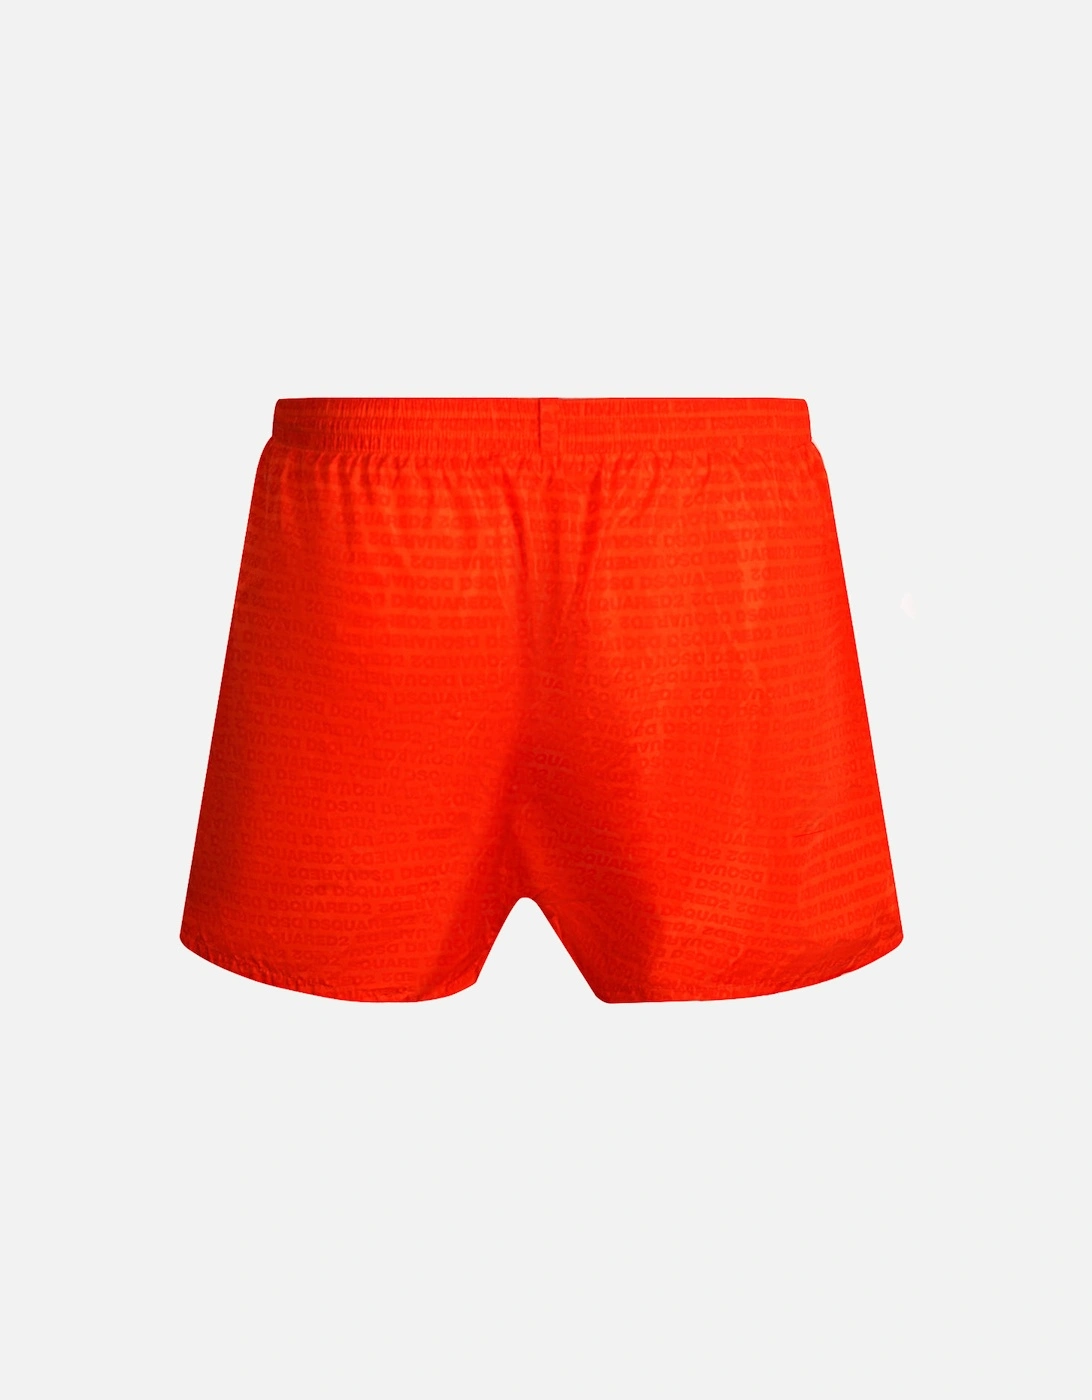 All-over Design Red Swim Shorts